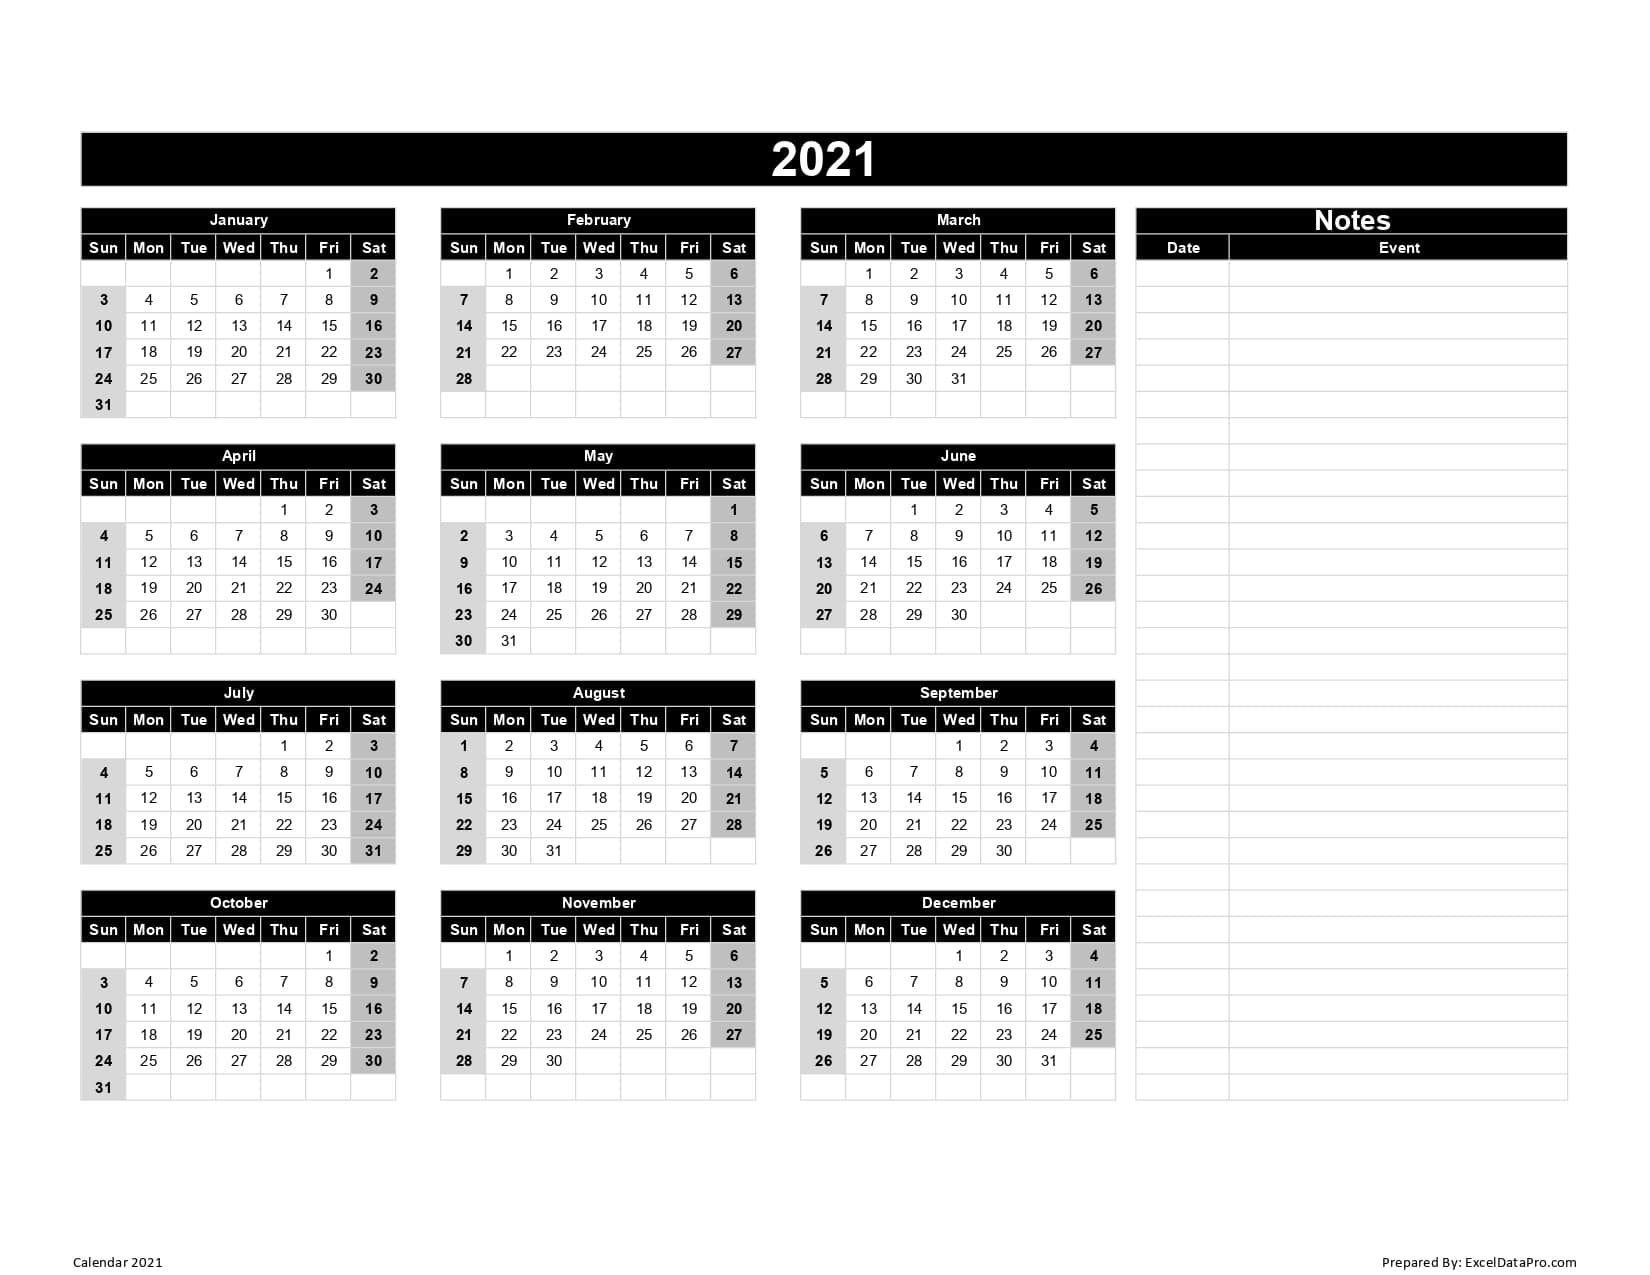 Calendar 2021 Excel Templates, Printable PDFs & Images ExcelDataPro